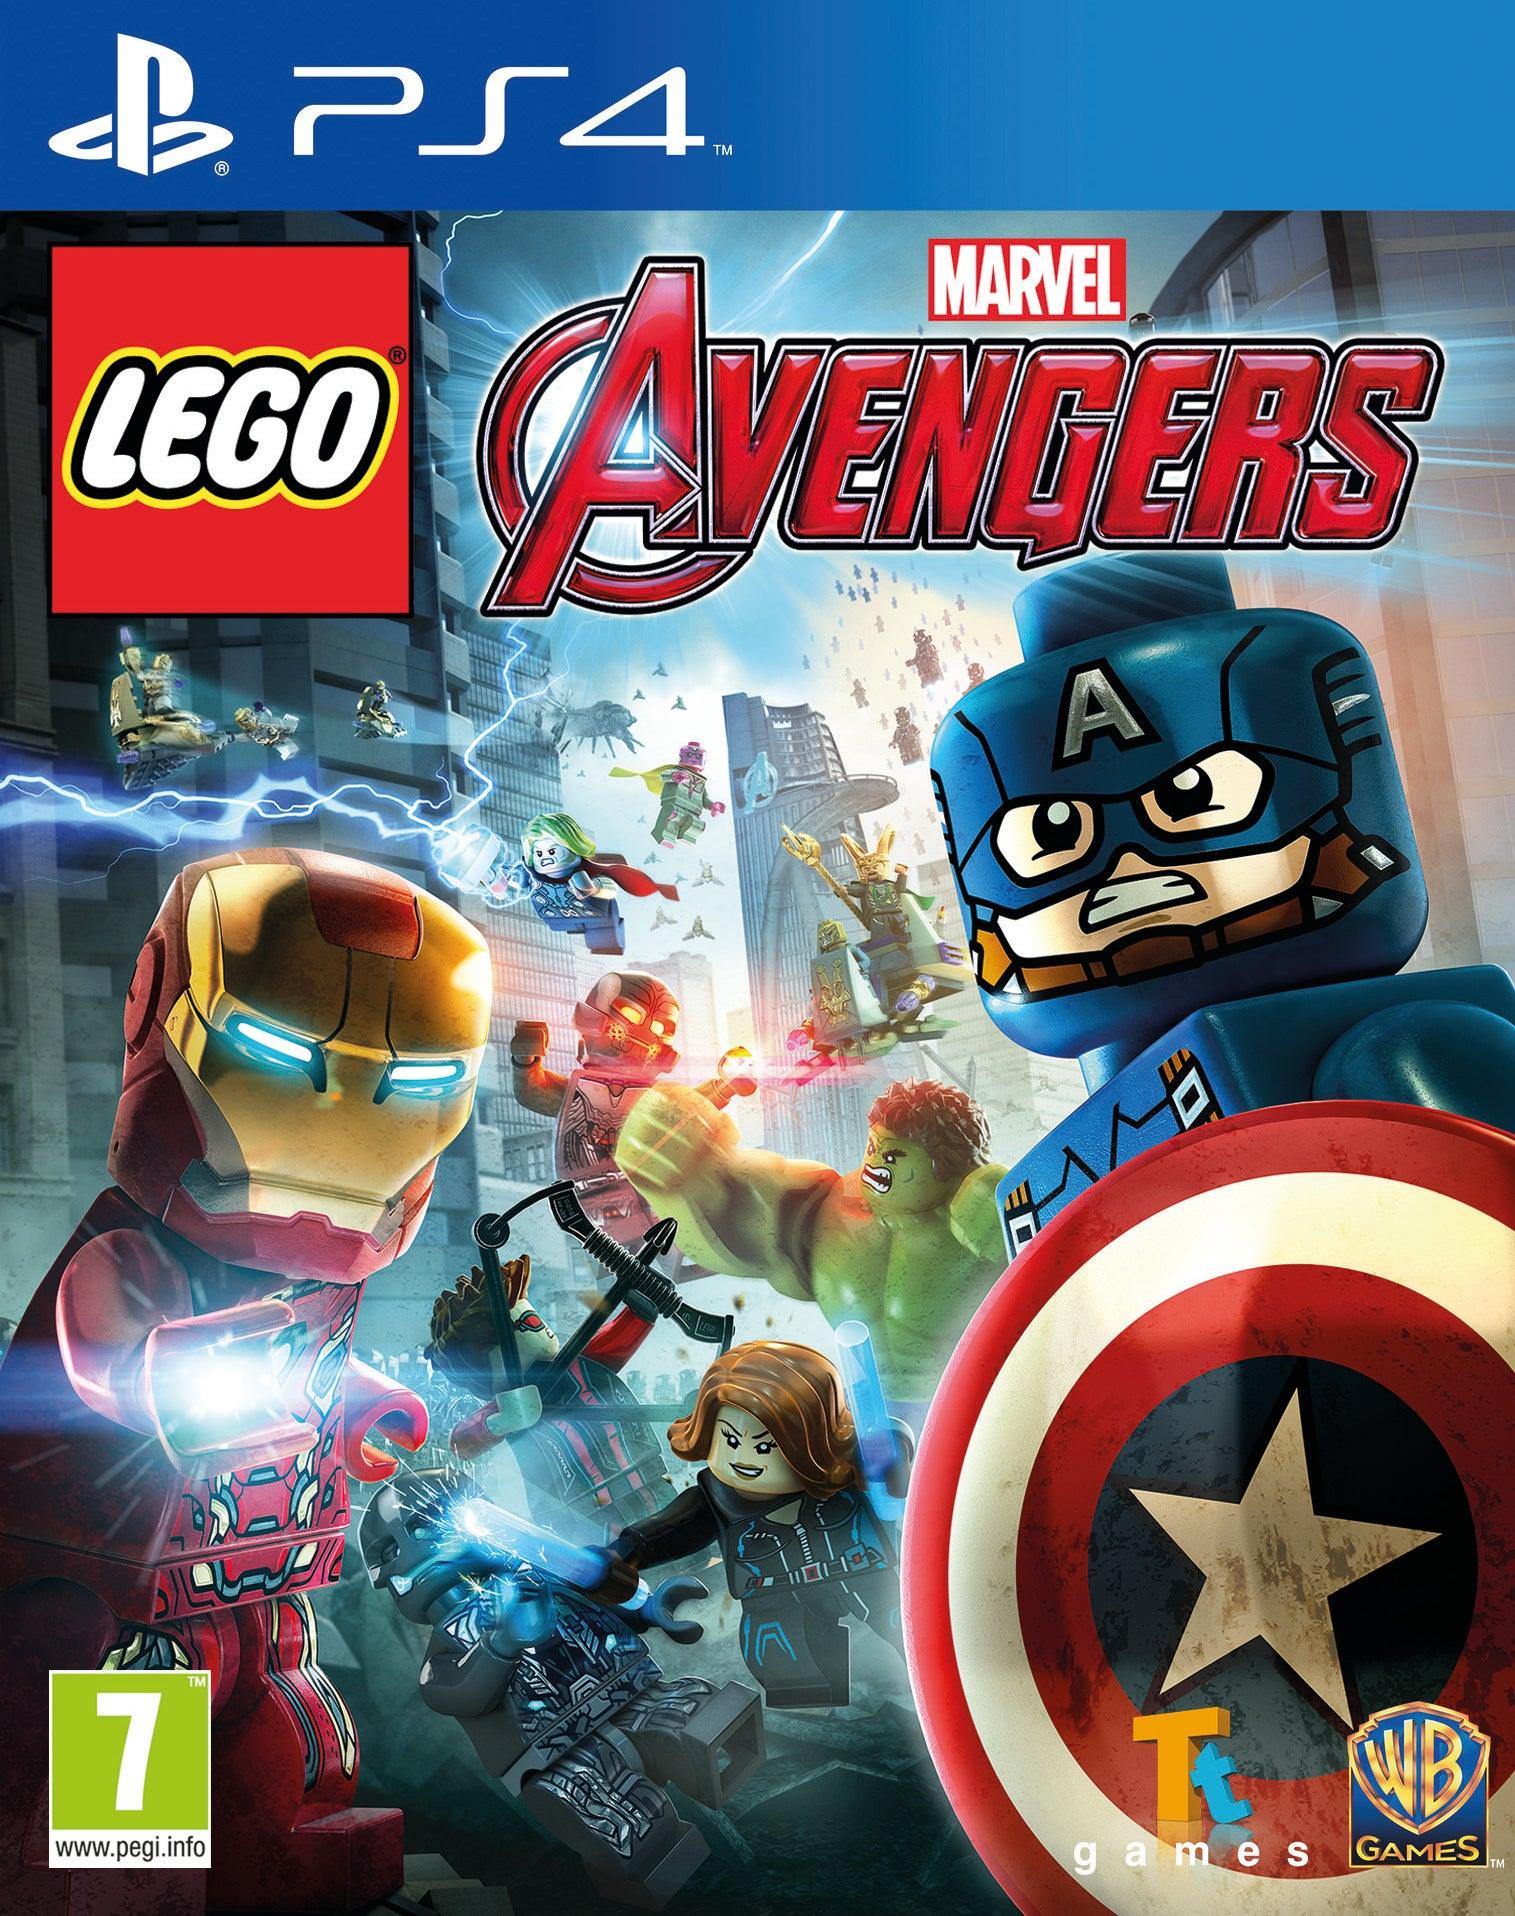 Lego Marvel Avengers - Want a New Gadget